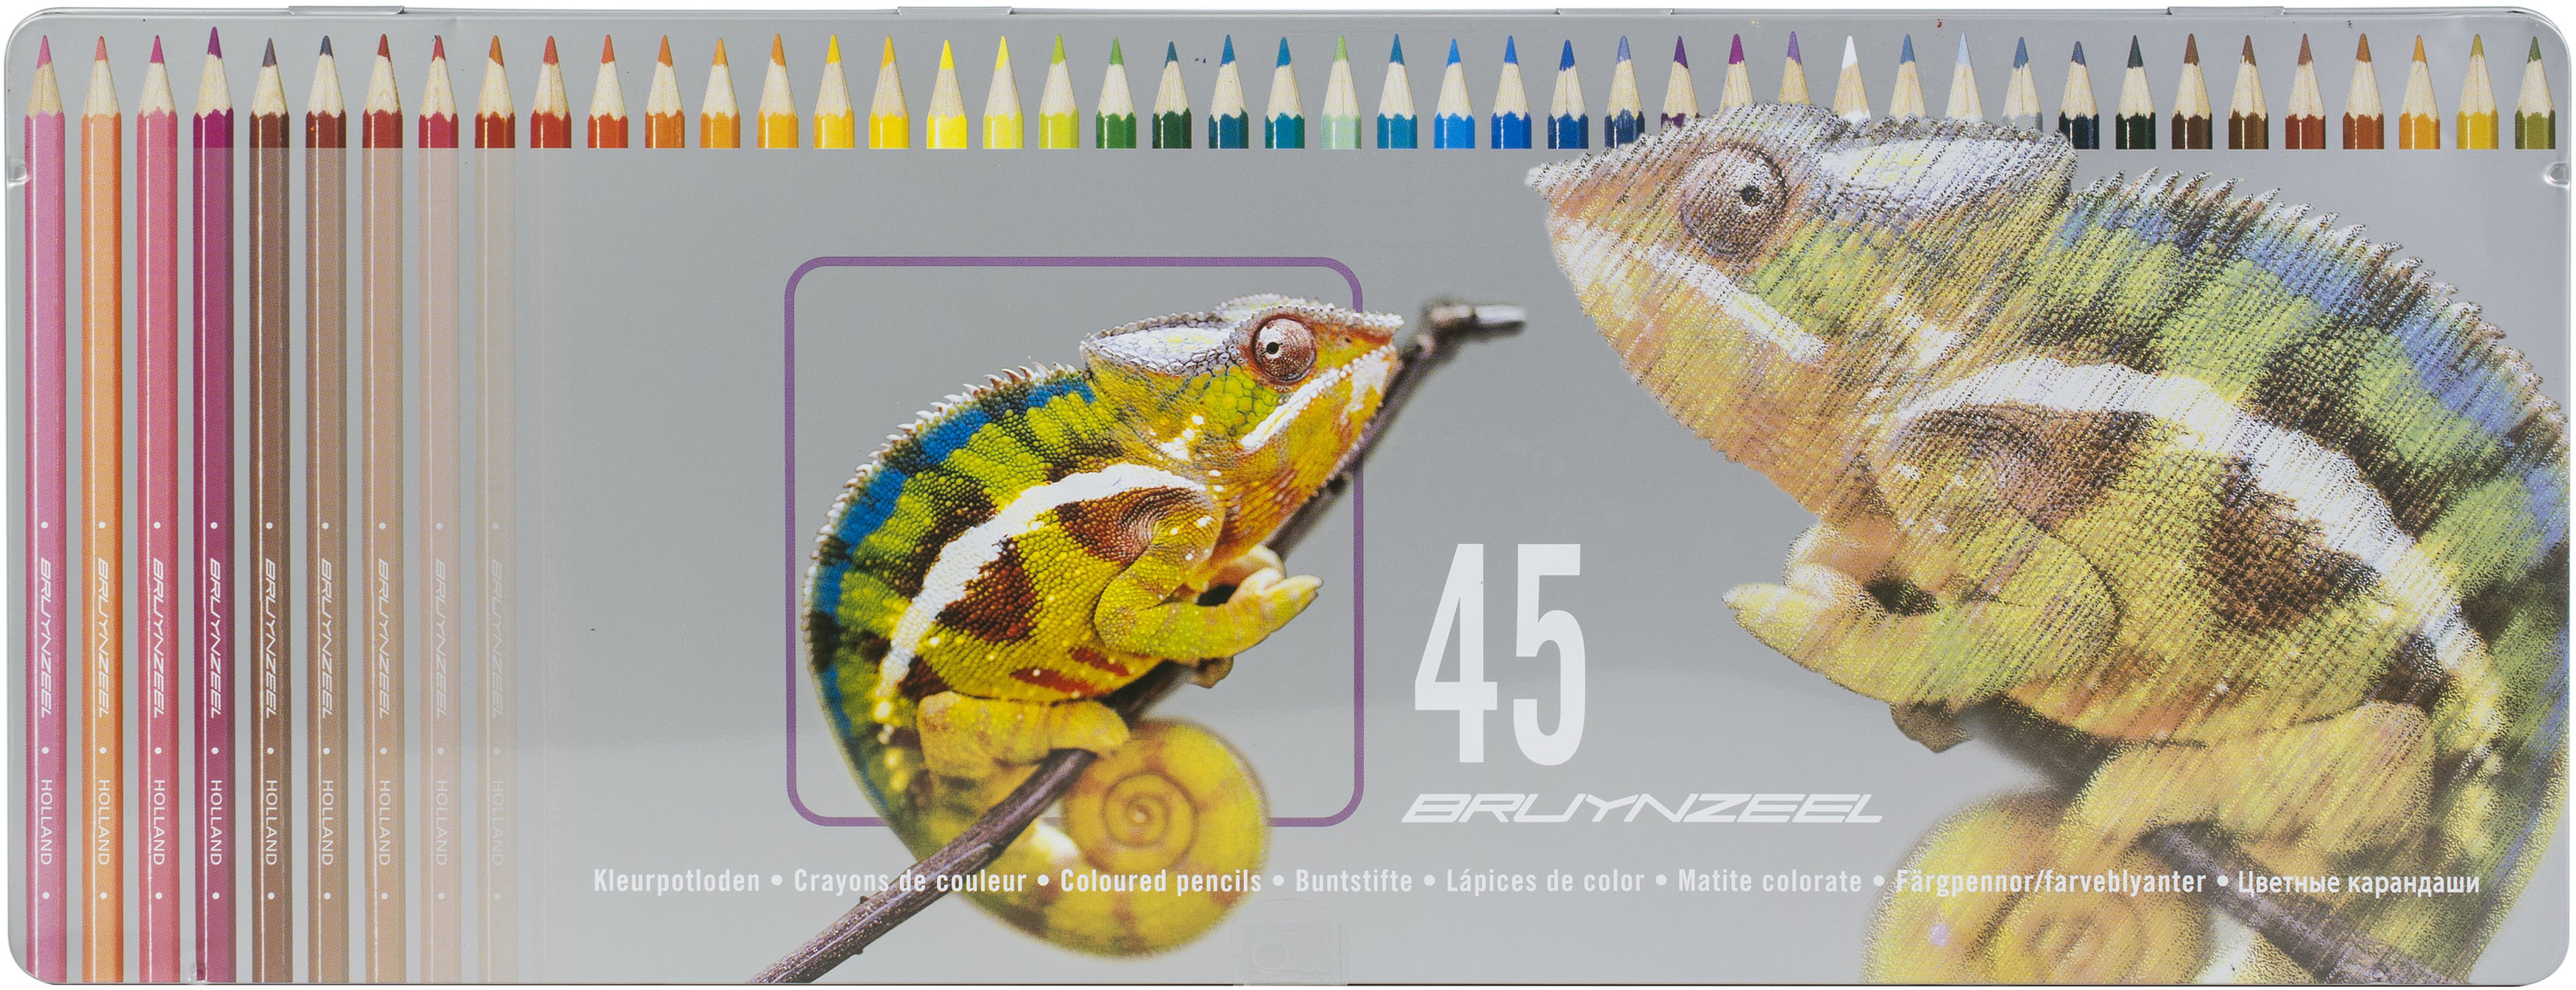 Bruynzeel Dutch Masters Colored Pencil Set of 24 - 20207544